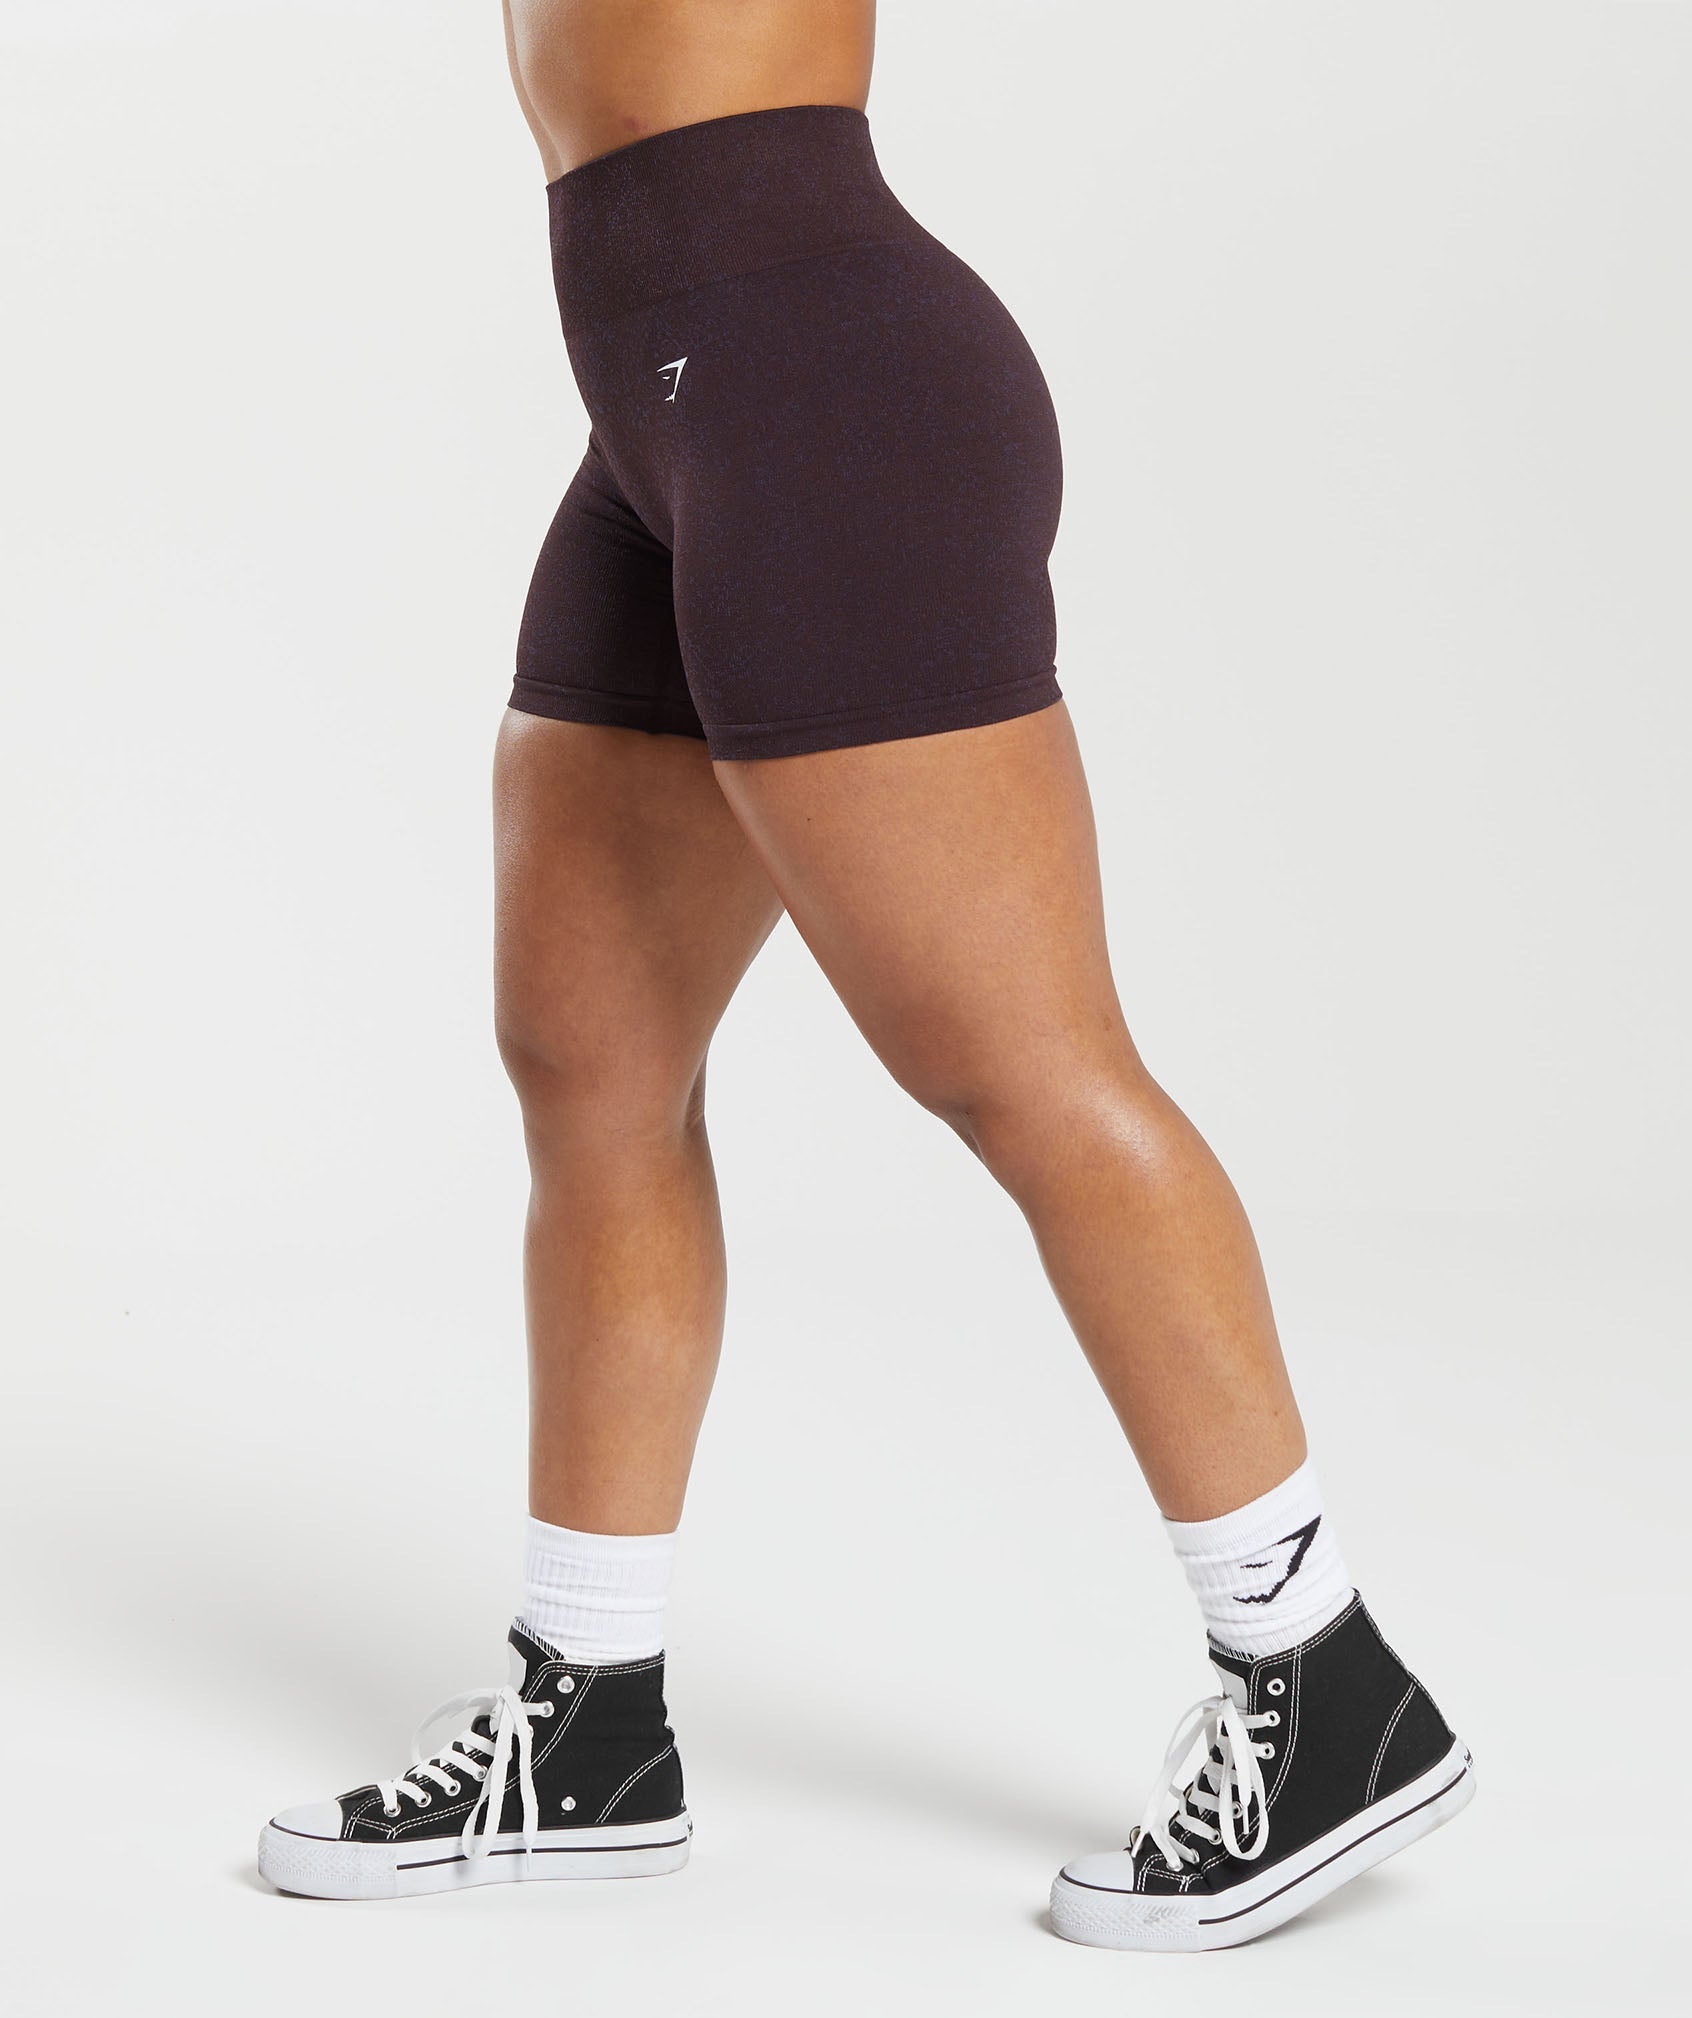 Adapt Fleck Seamless Shorts in Plum Brown/Dewberry Purple - view 3